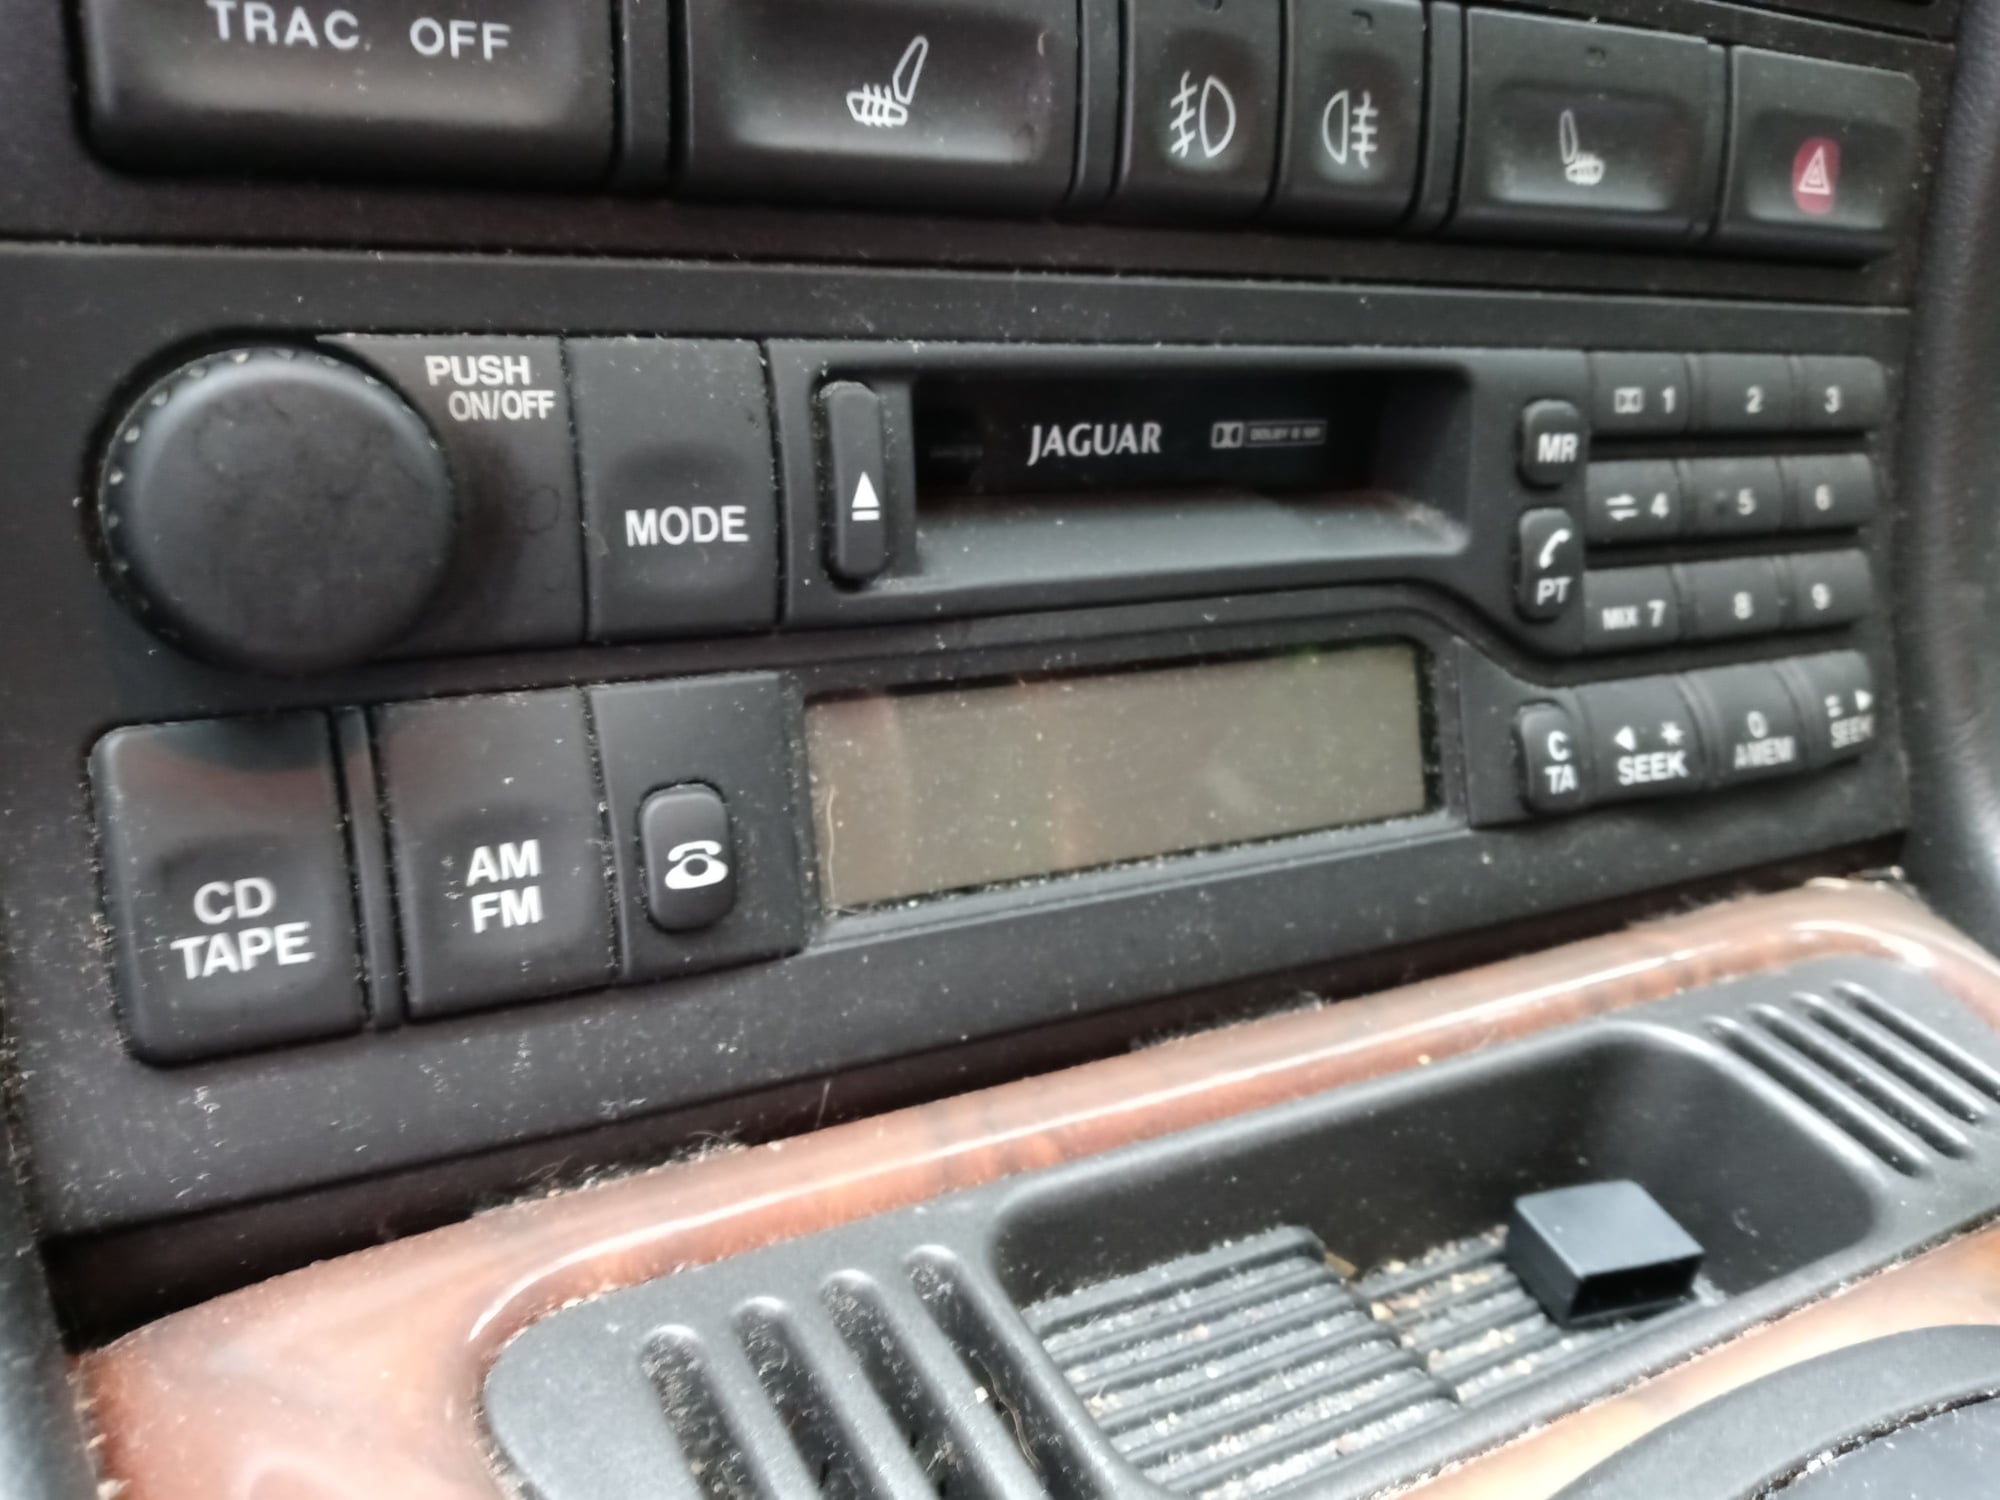 1997 Jaguar XK8 - 99 - 06 Alpine Head Unit Radio, Amp, CD Changer and cartridges. - Audio Video/Electronics - $75 - Atlanta, GA 30339, United States